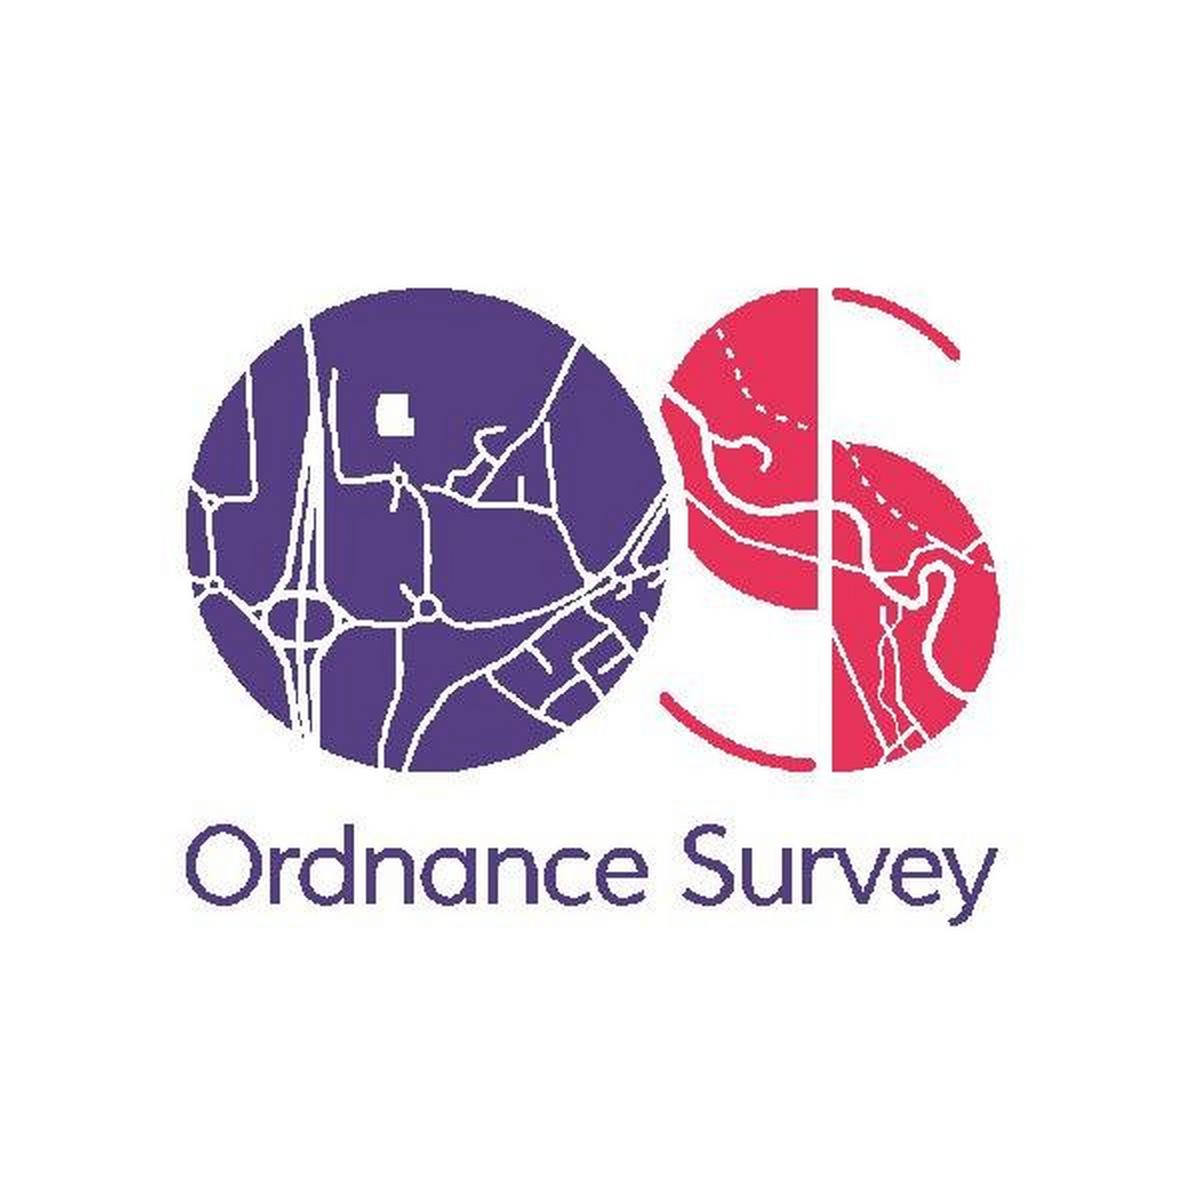 Ordnance Survey OS Explorer Map 287 West Pennine Moors